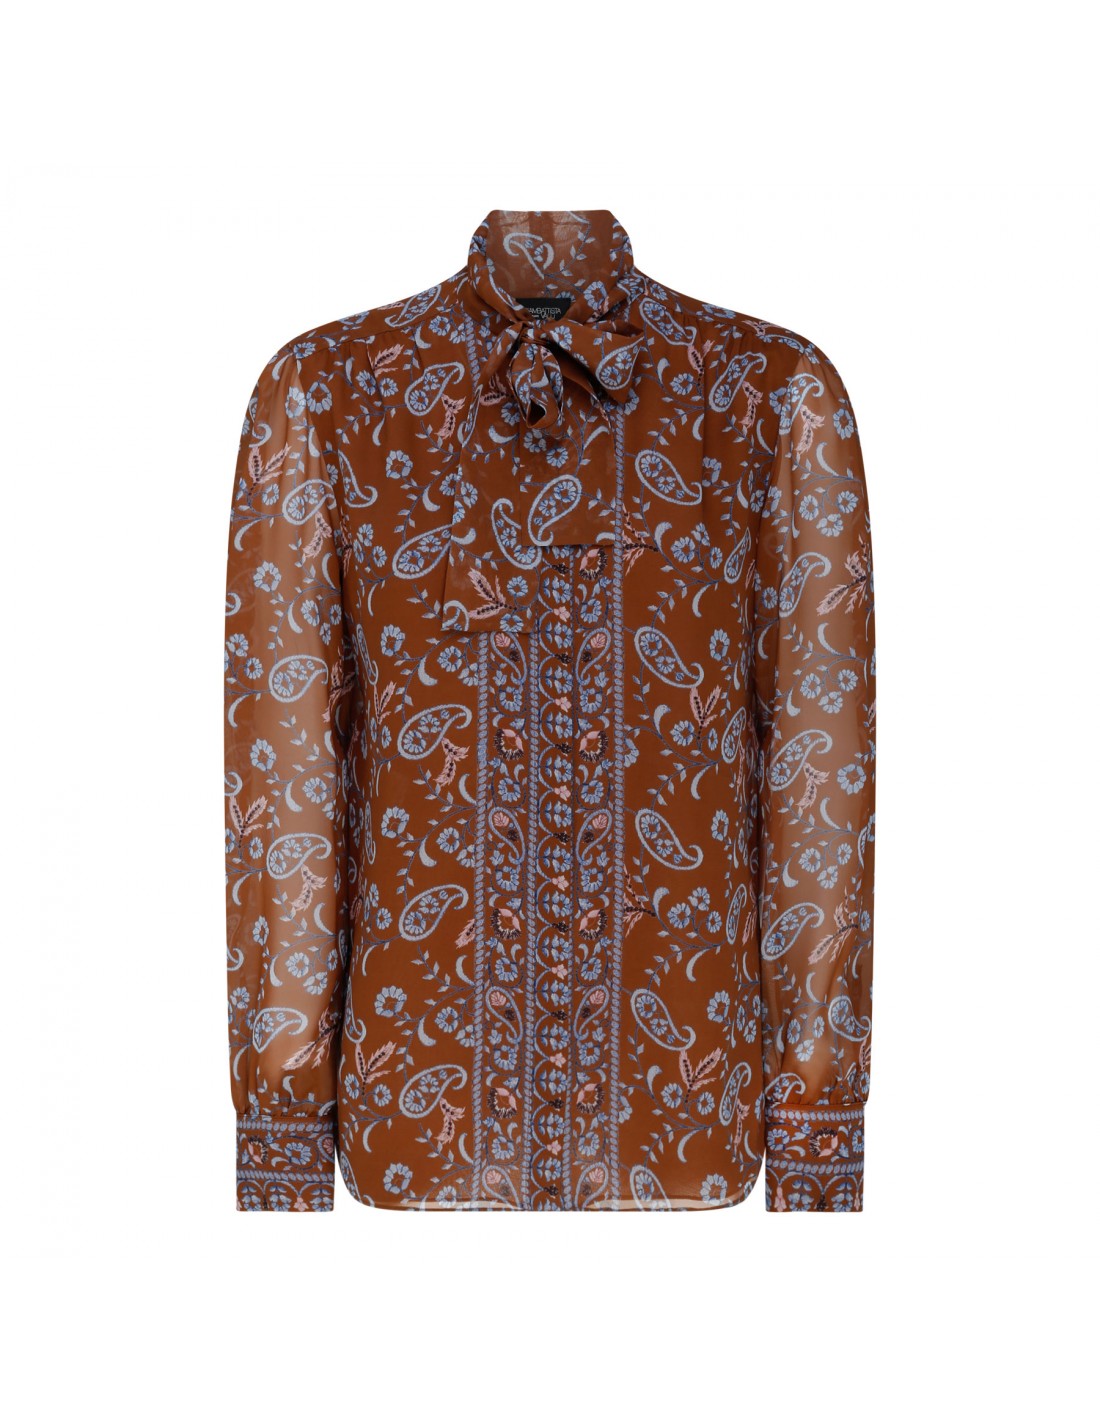 Paisley motif printed blouse